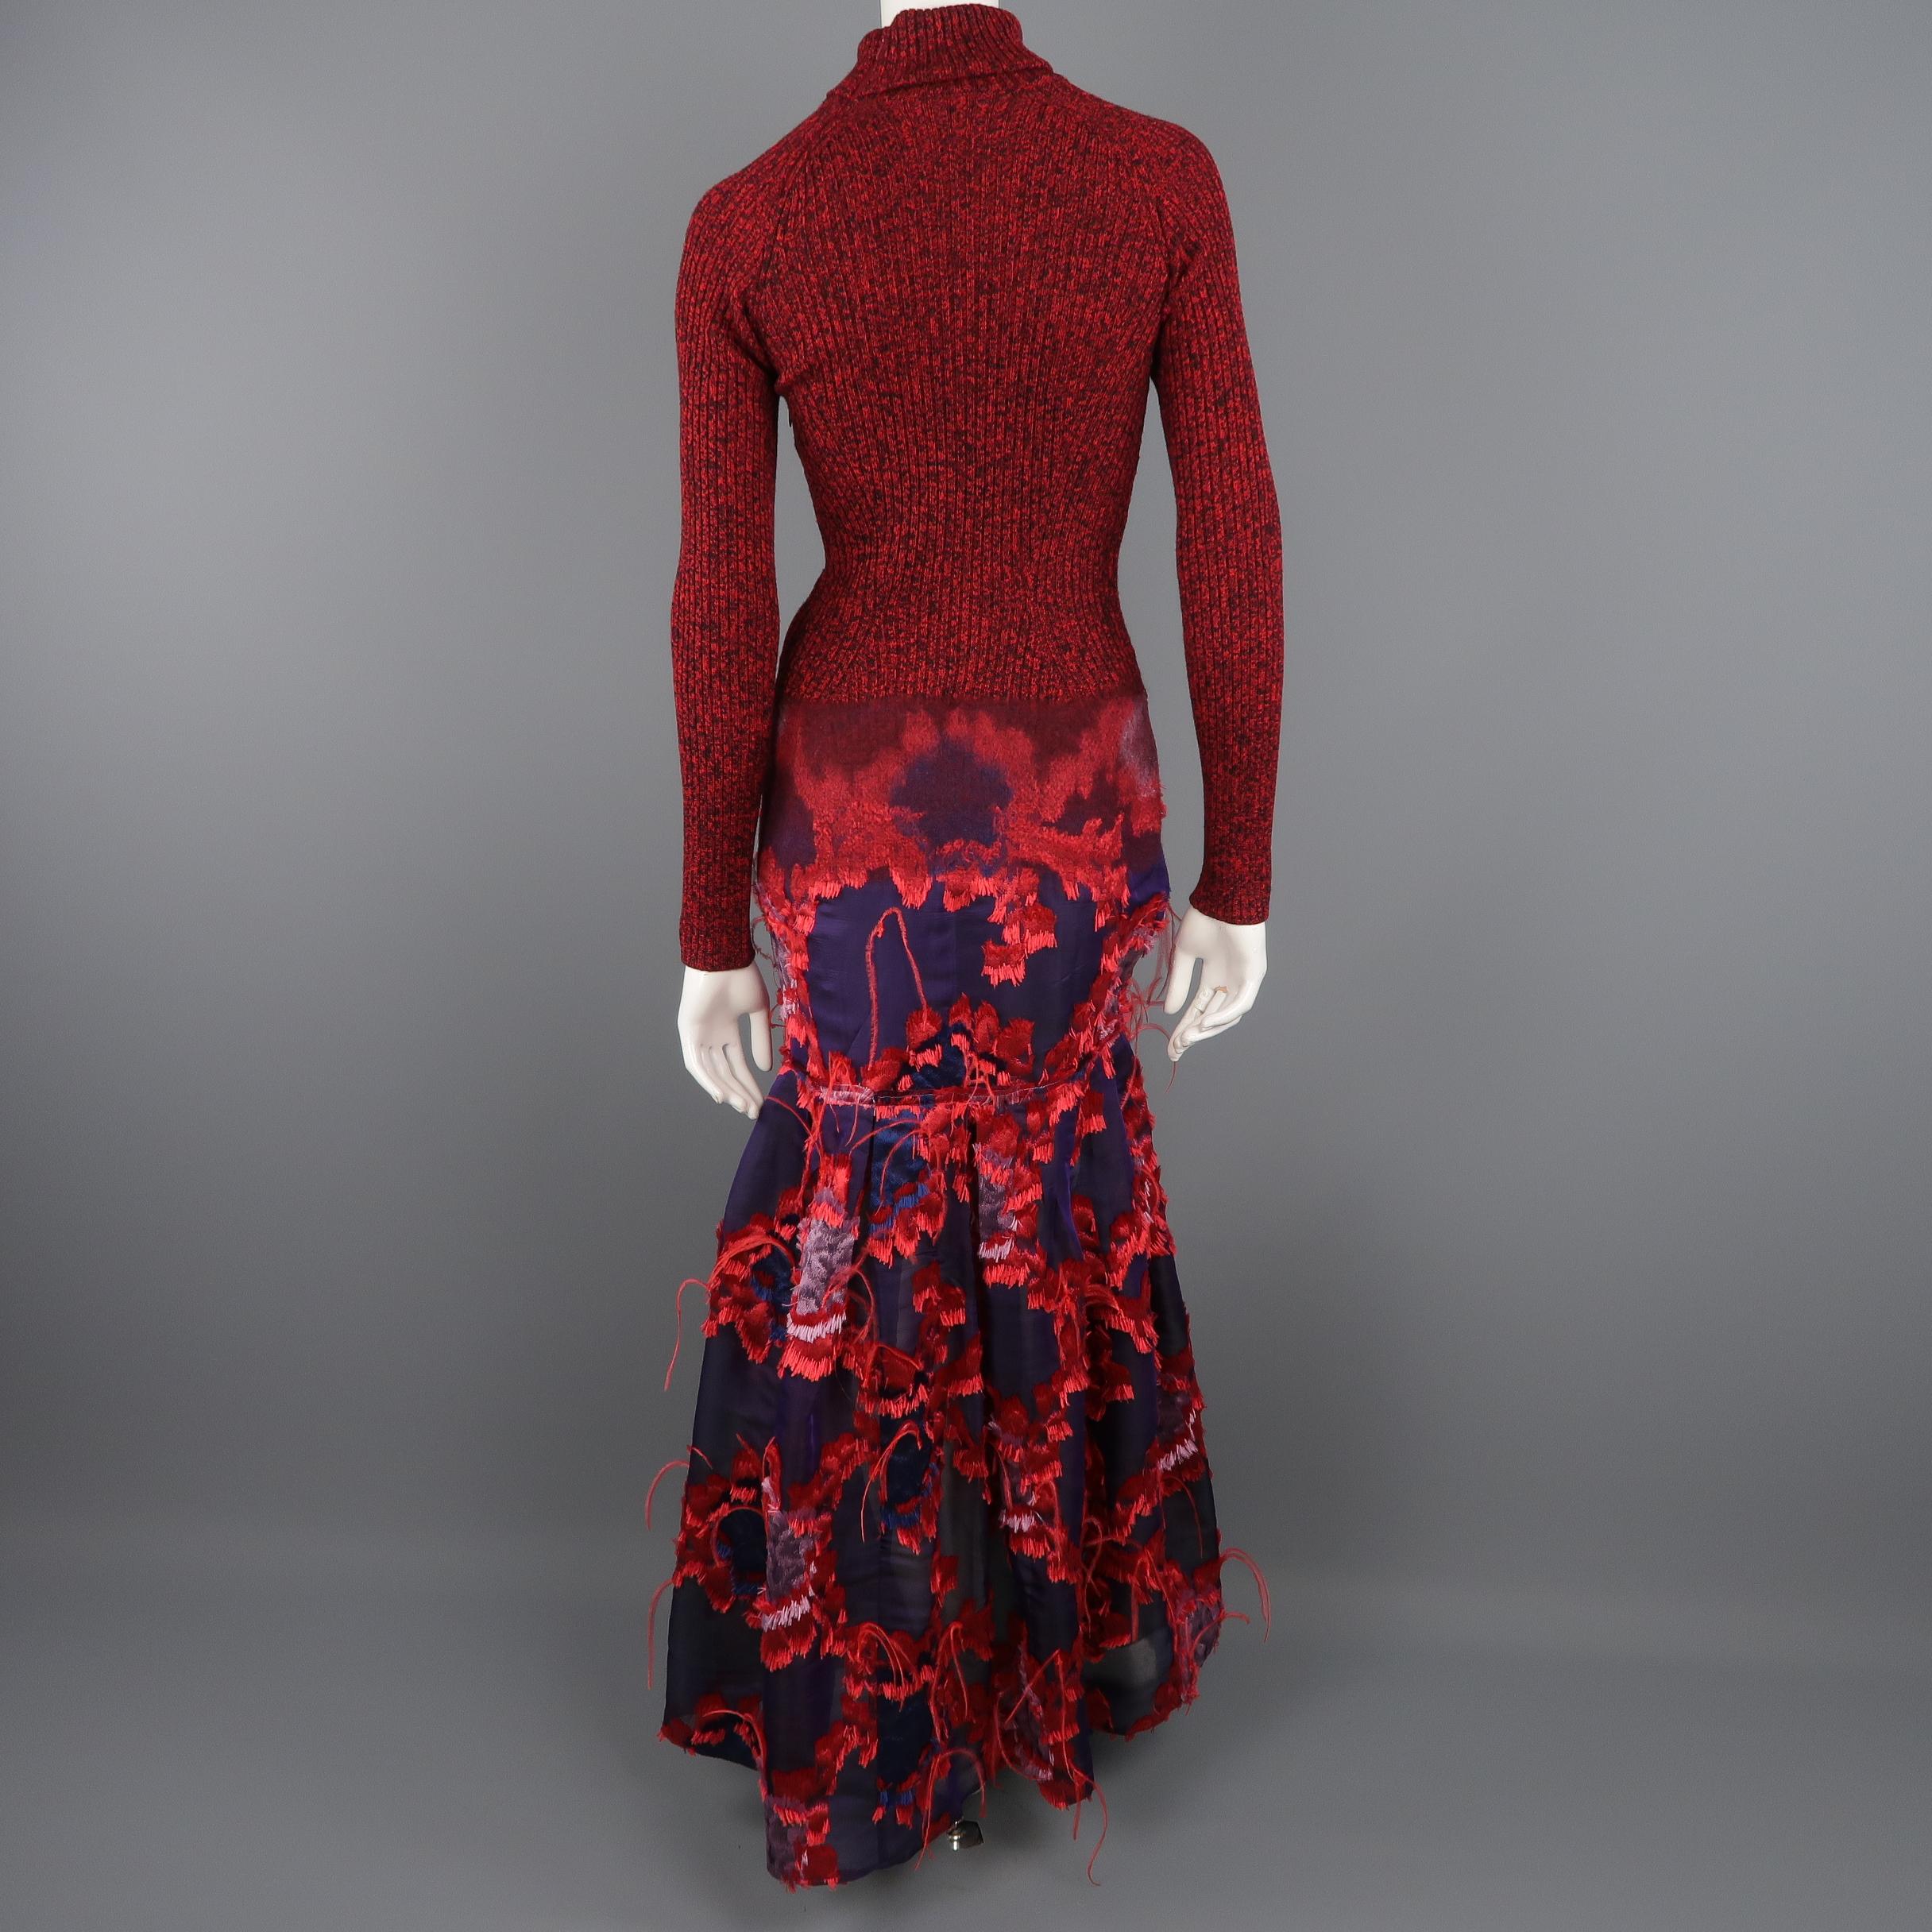 ERDEM Gown - Fall 2015 Runway - Red, Purple, Knit, Taffeta Feather Evening Dress 6